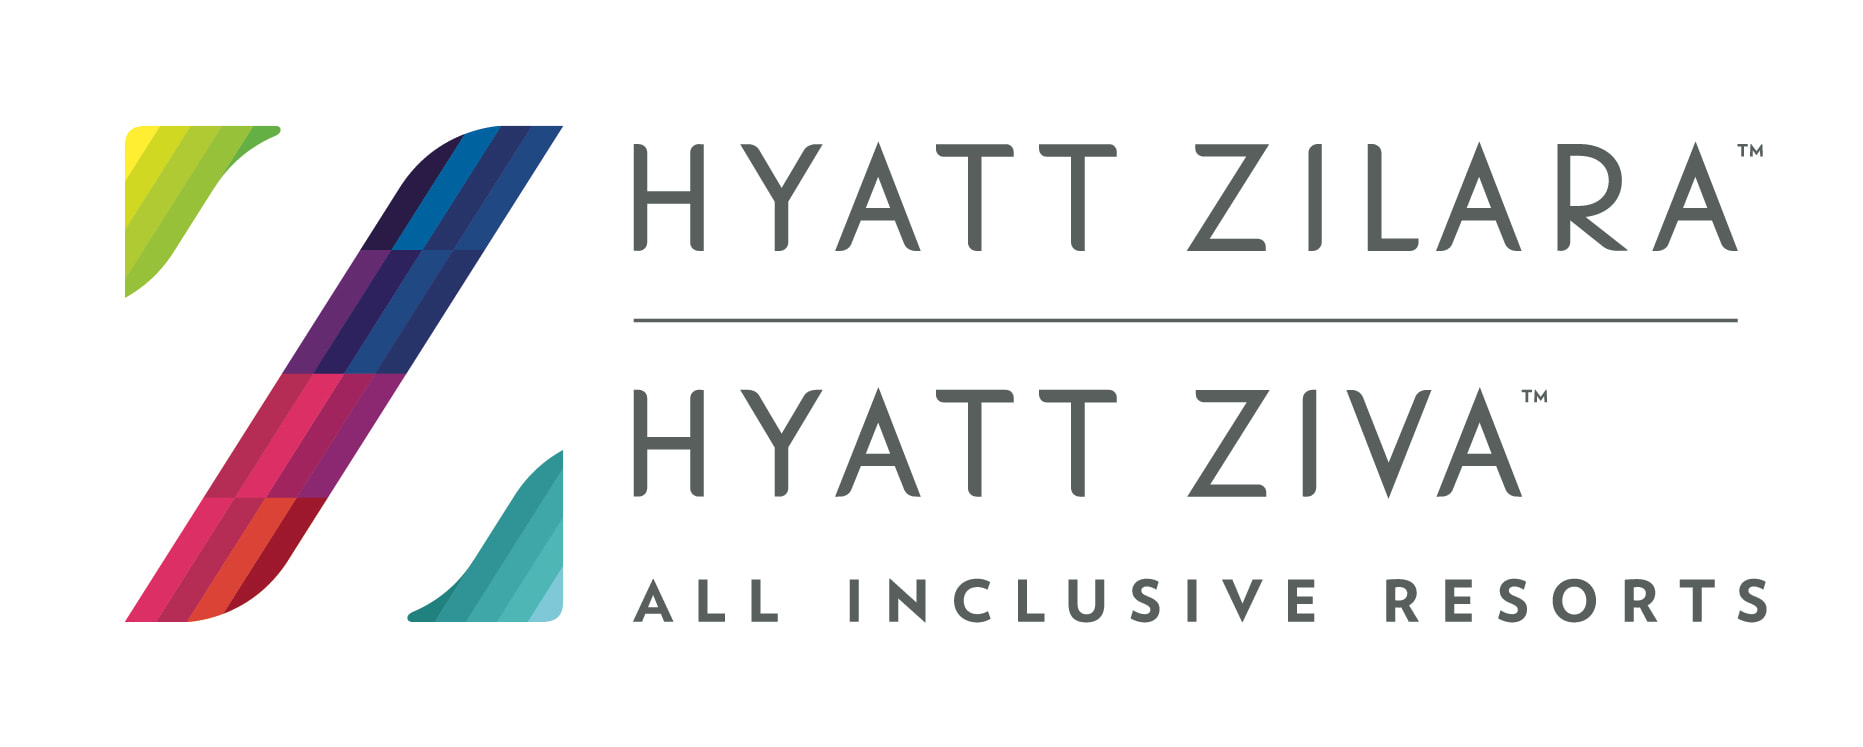 Hyatt all inclusive resorts